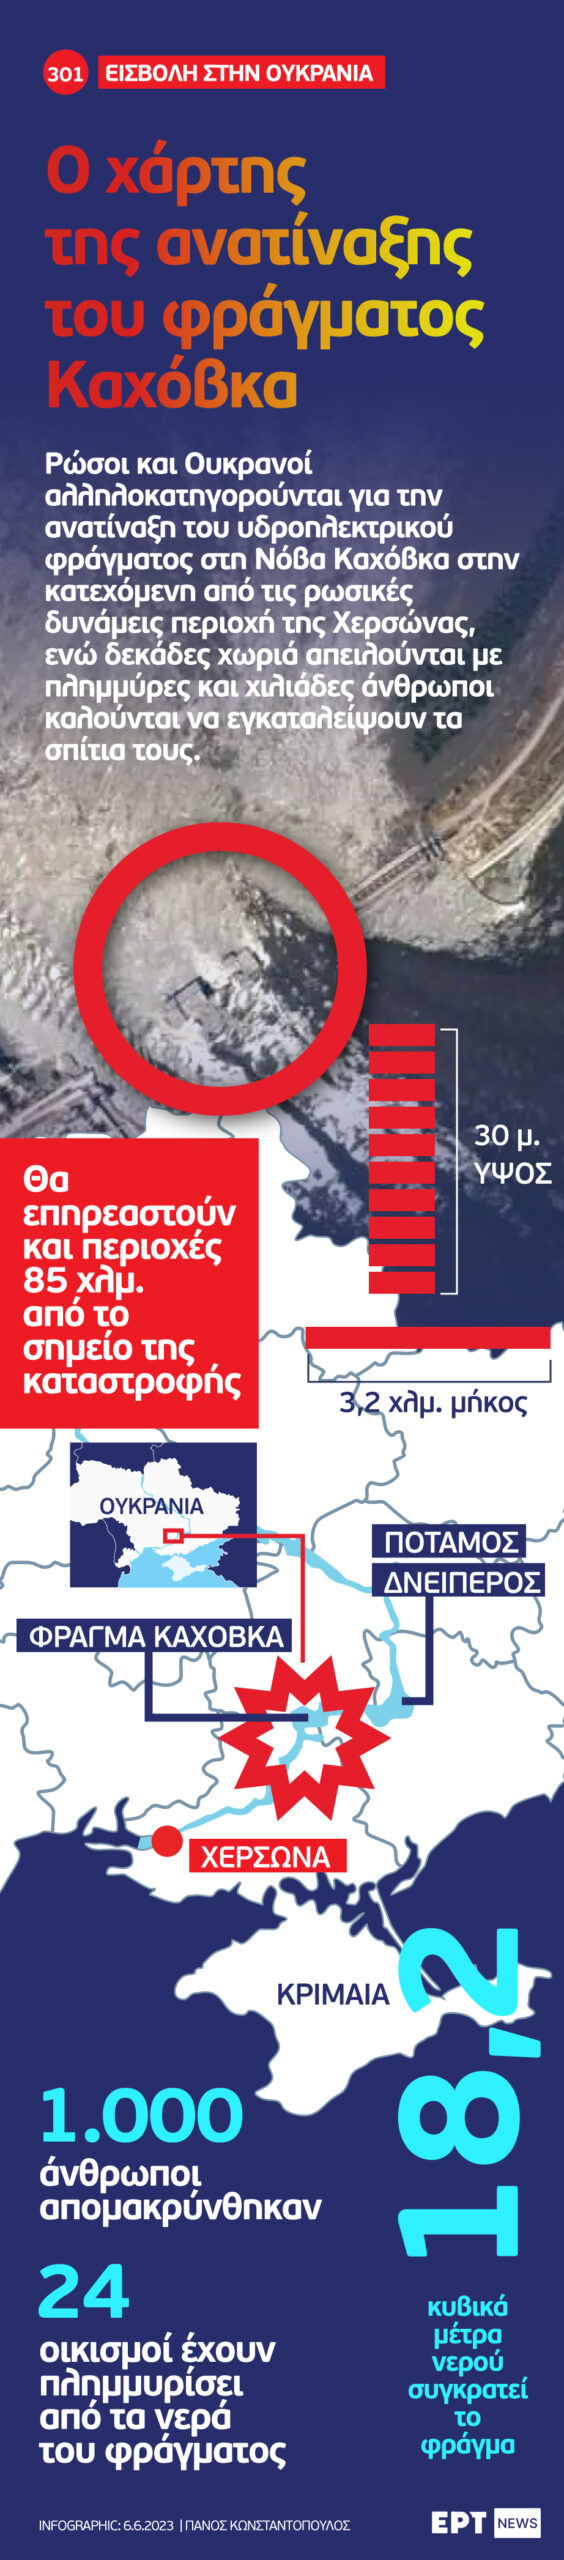 Infographic: Ο χάρτης της ανατίναξης του φράγματος στην Καχόβκα